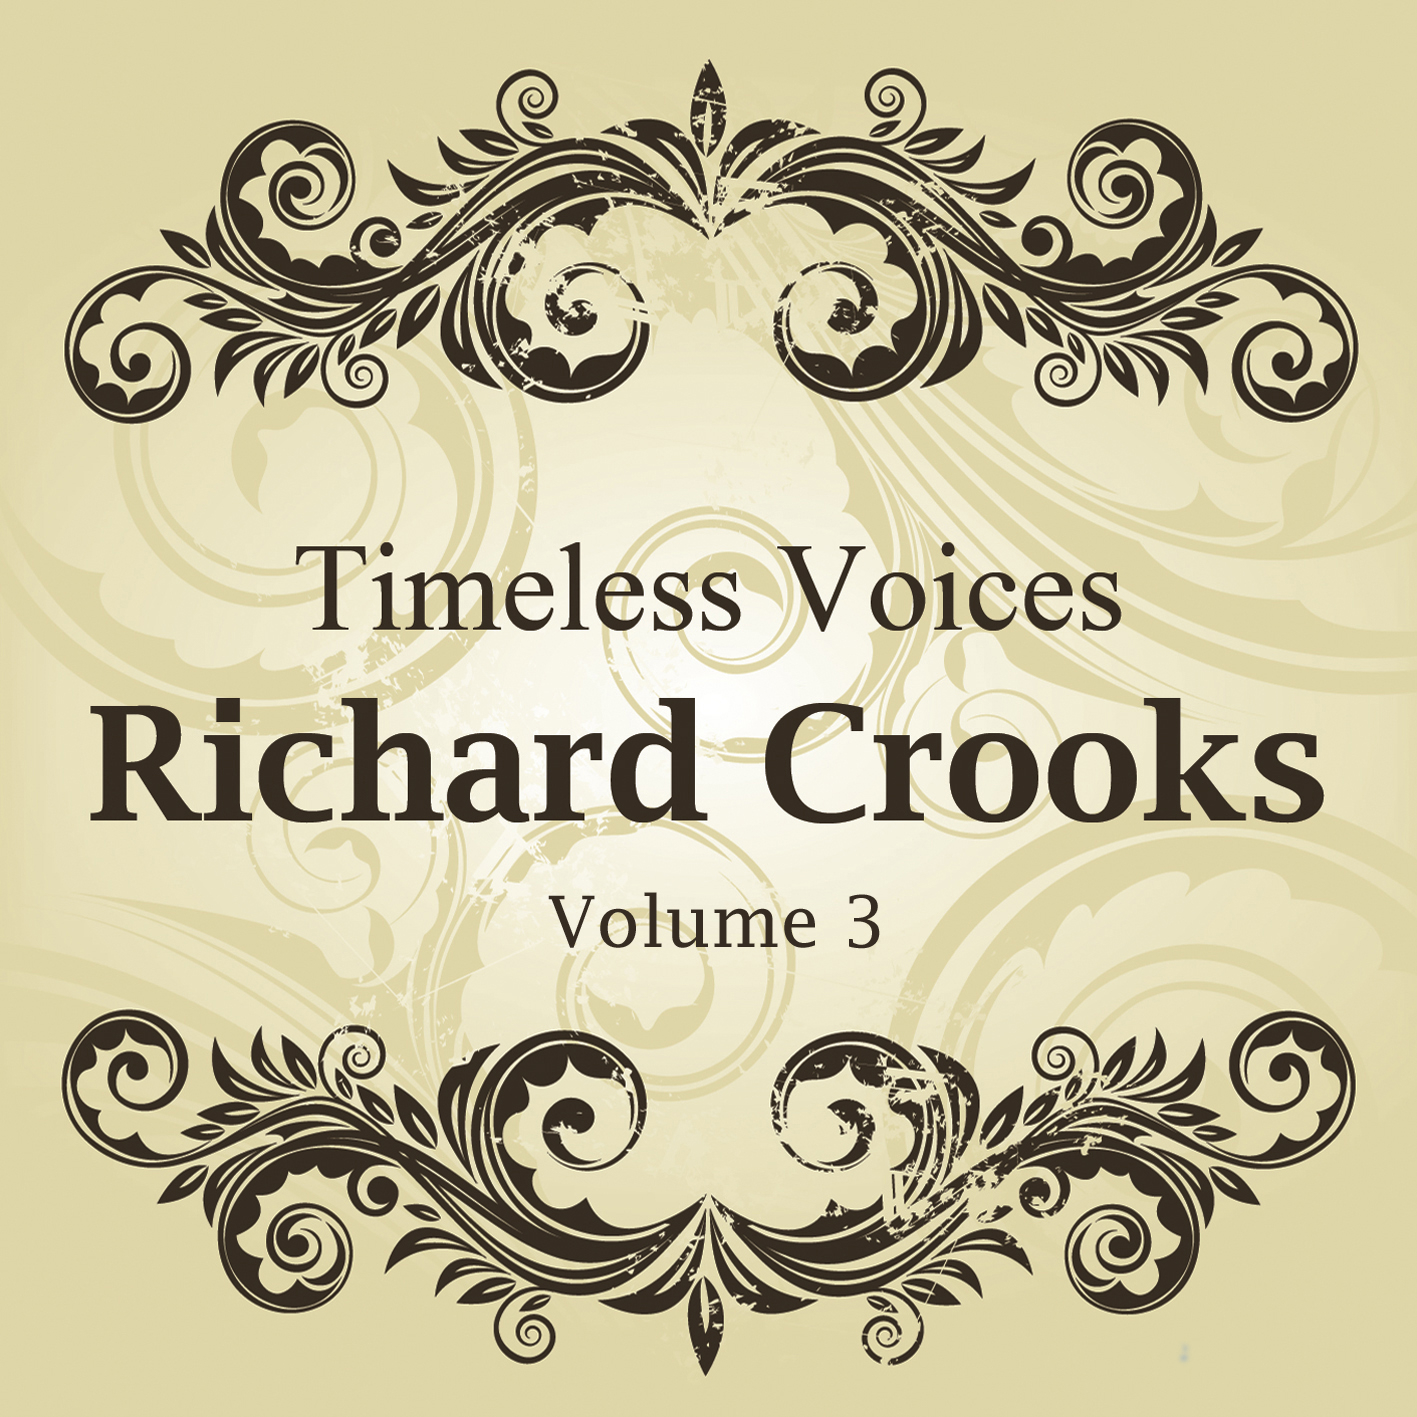 Timeless Voices: Richard Crooks Vol 3